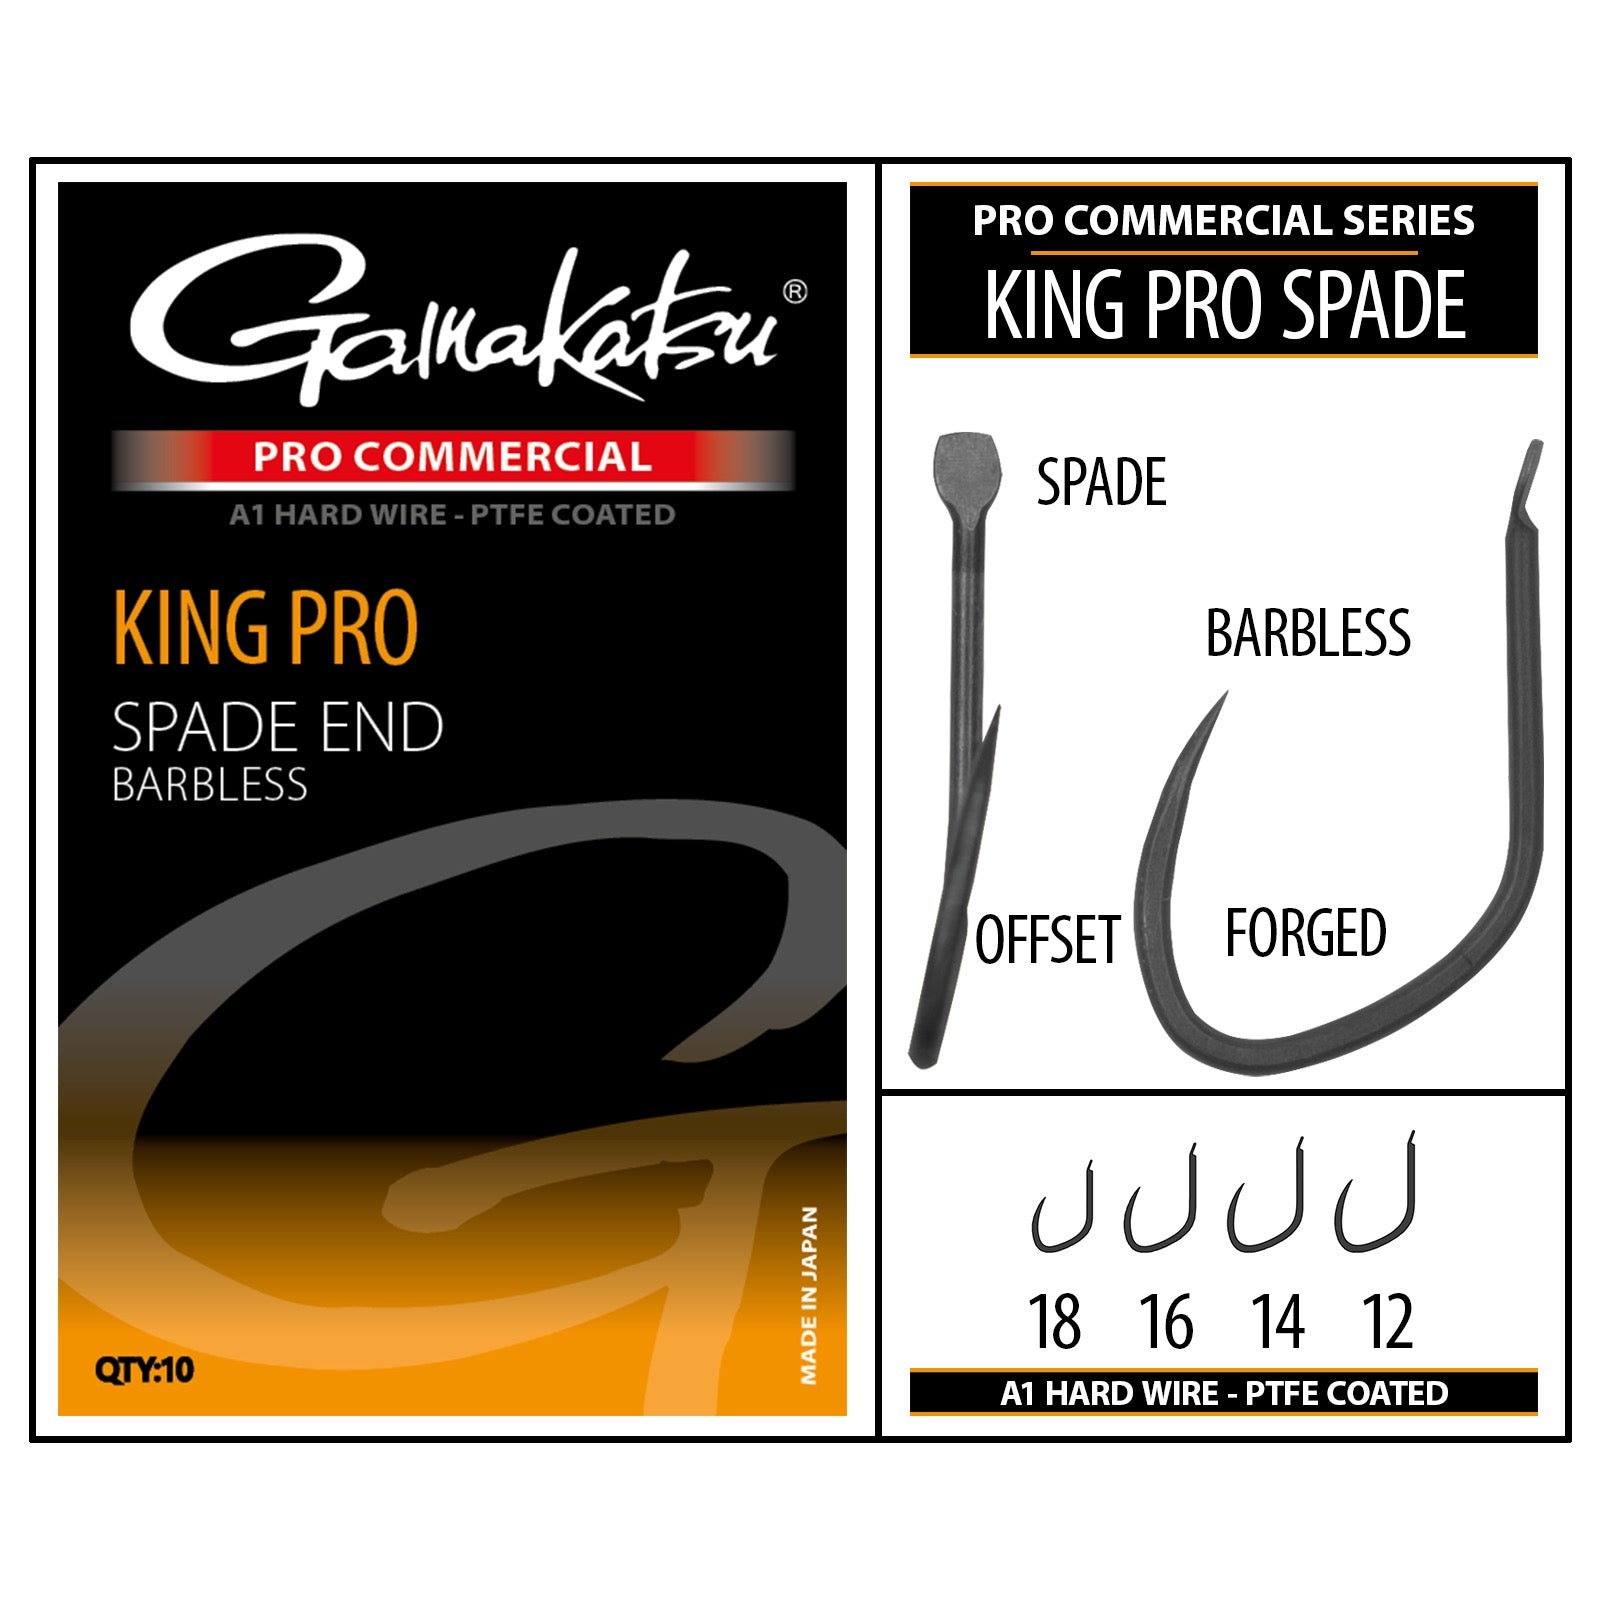 Gamakatsu Pro Commercial King Pro Spade End Barbless - Carpshop24